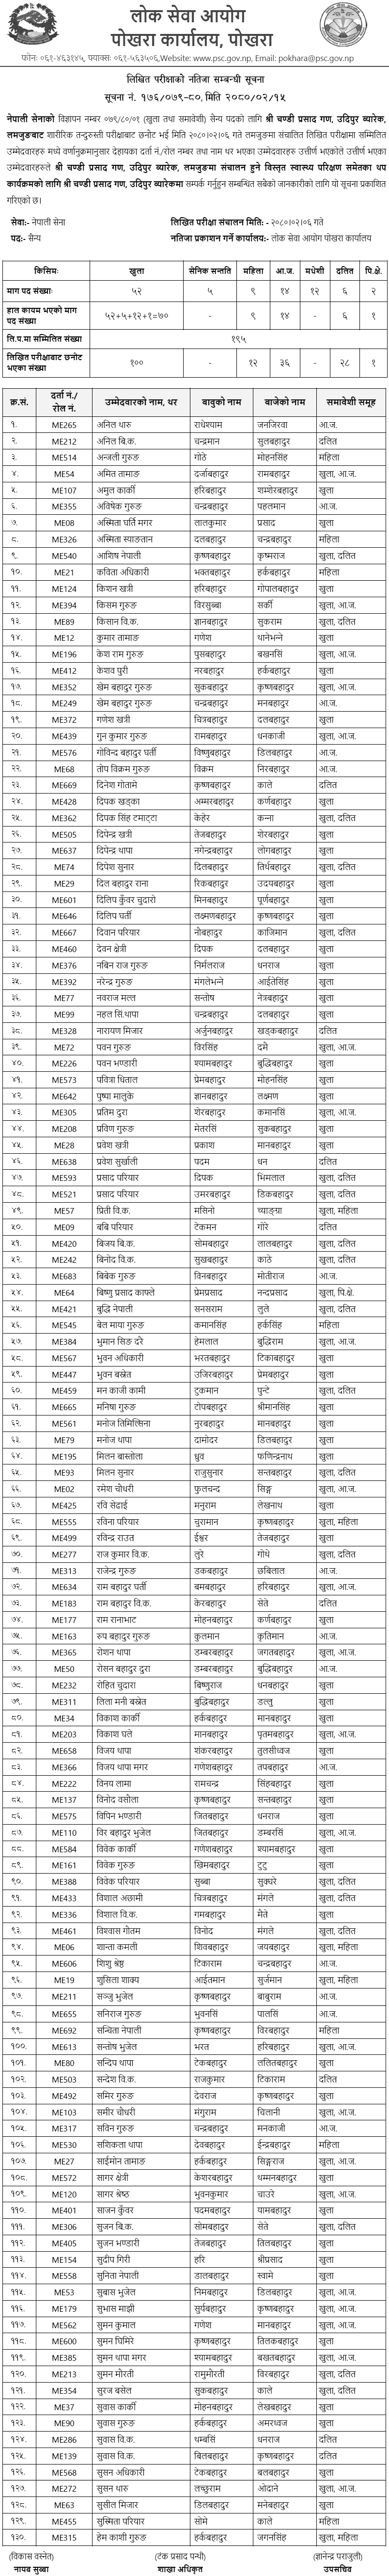 Nepal Army Sainya Written Exam Result 2080 (Okhaldhunga and Lamjung)